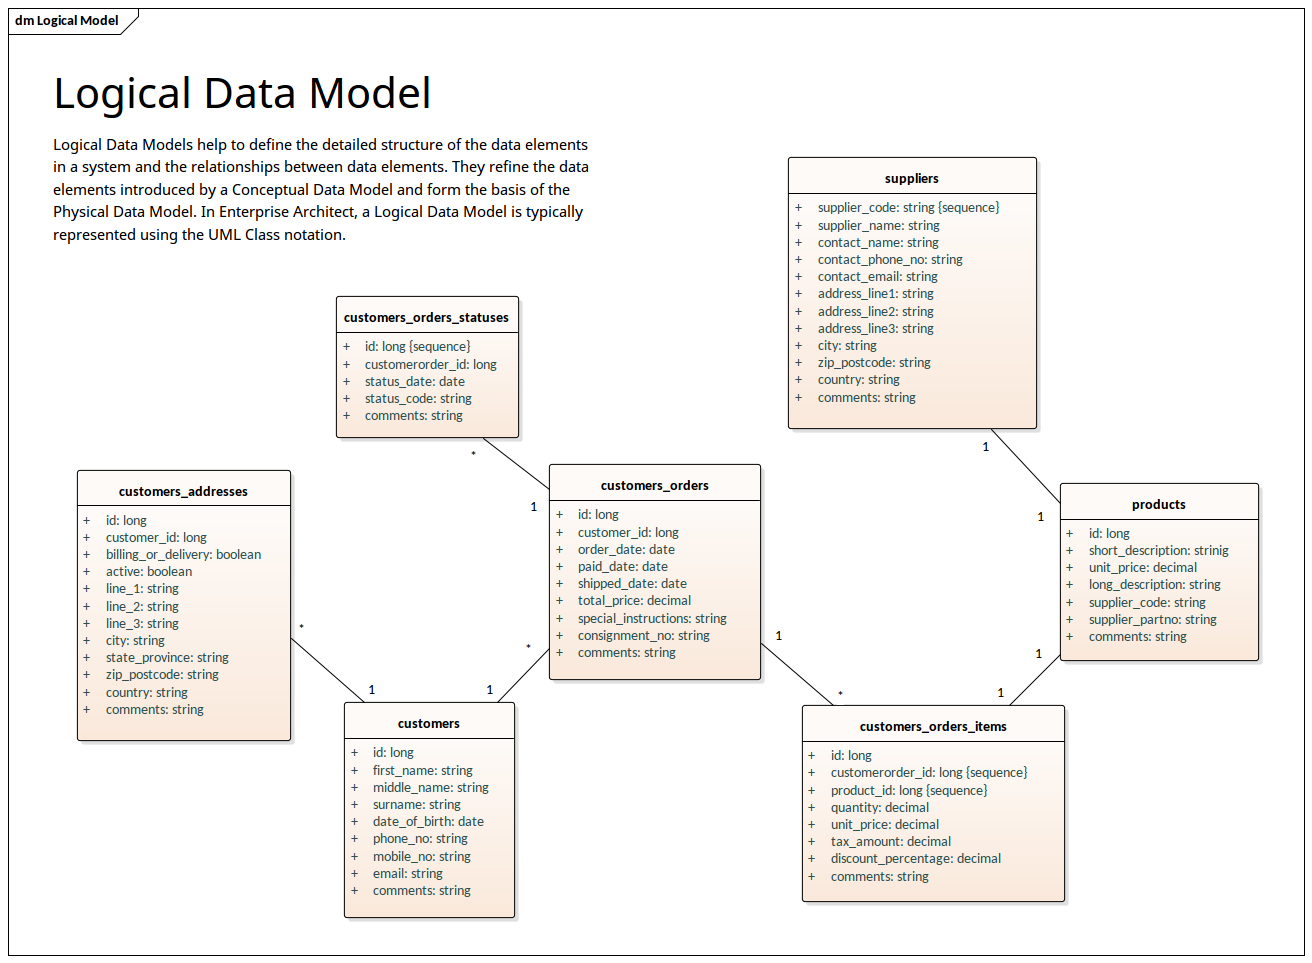 Logical Data Model - UML Notation